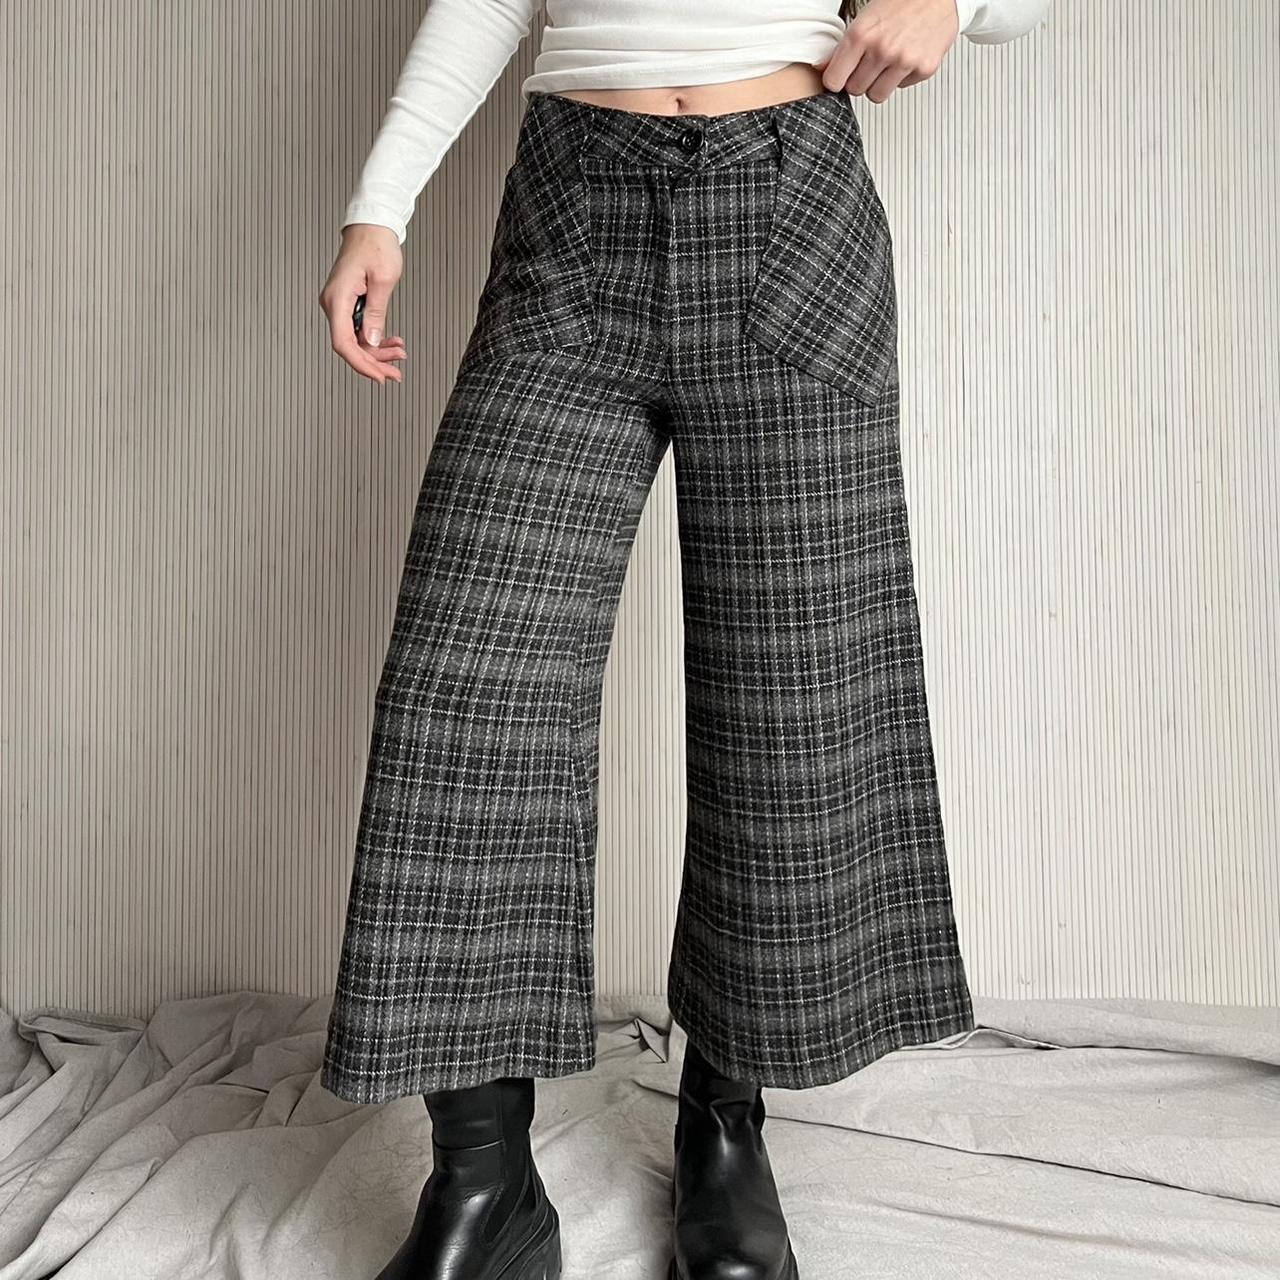 gaucho pants pattern